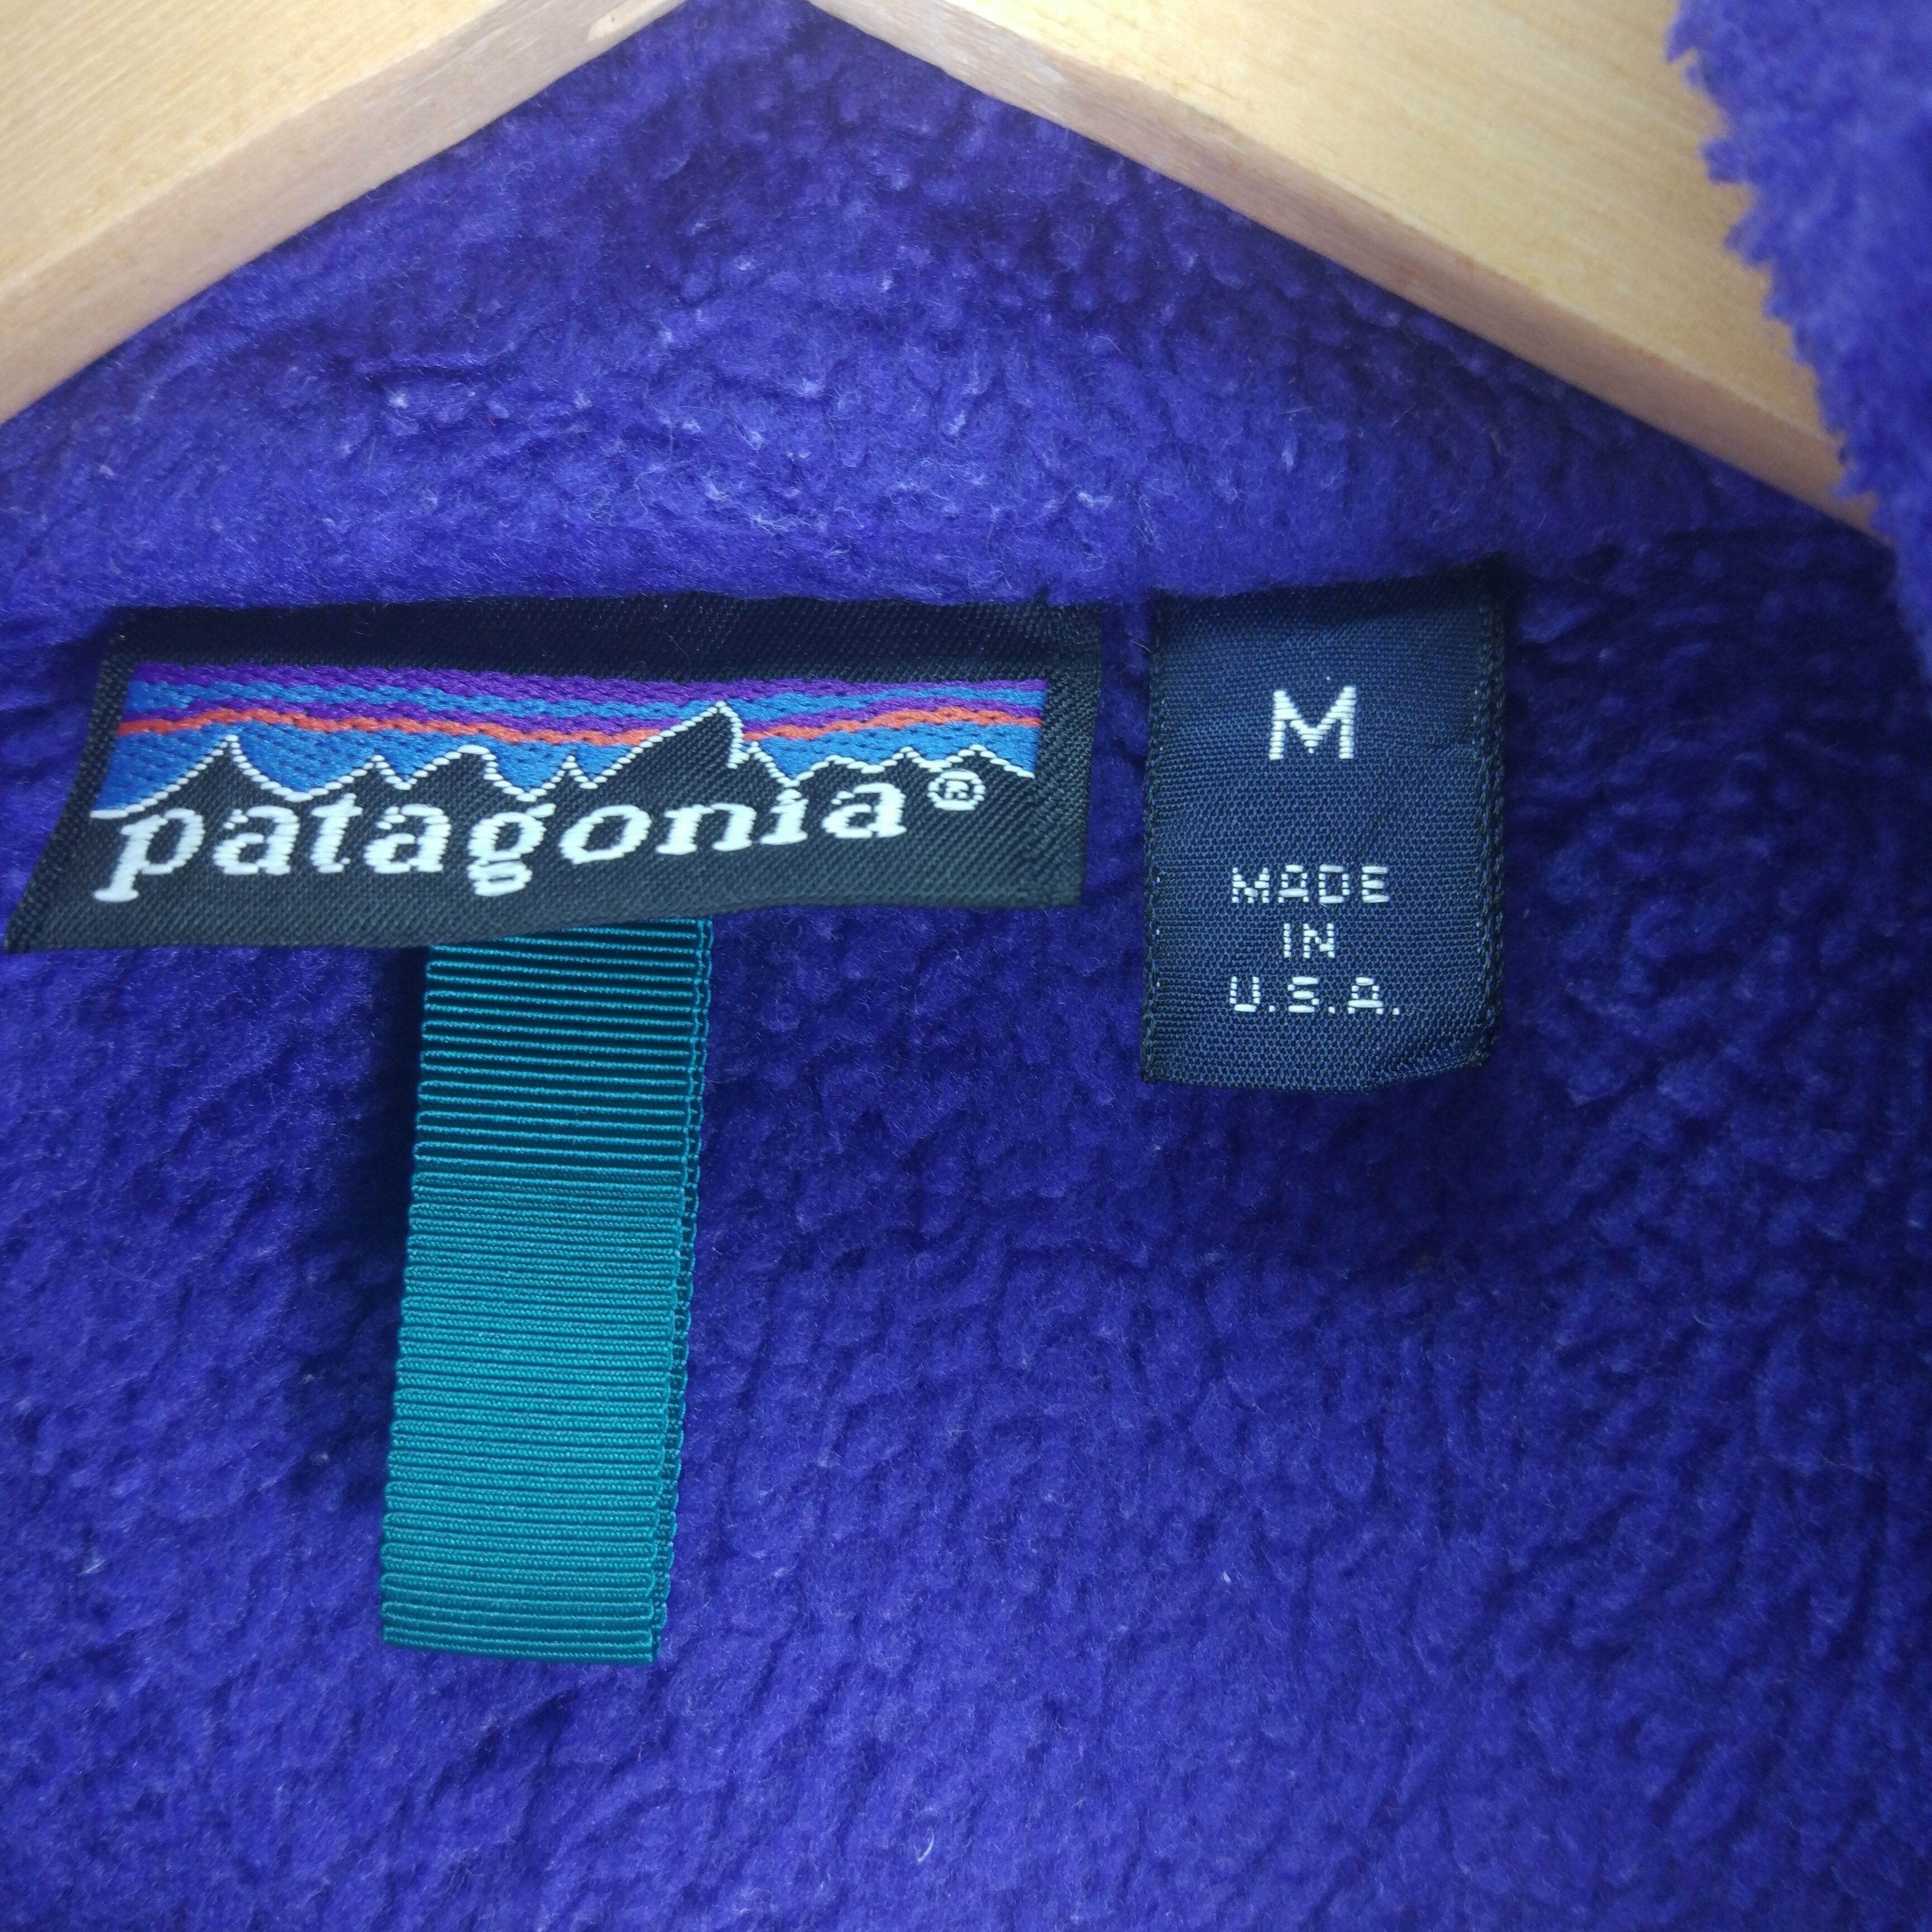 Patagonia Zip Up Fleece Jacket Made in USA - 5